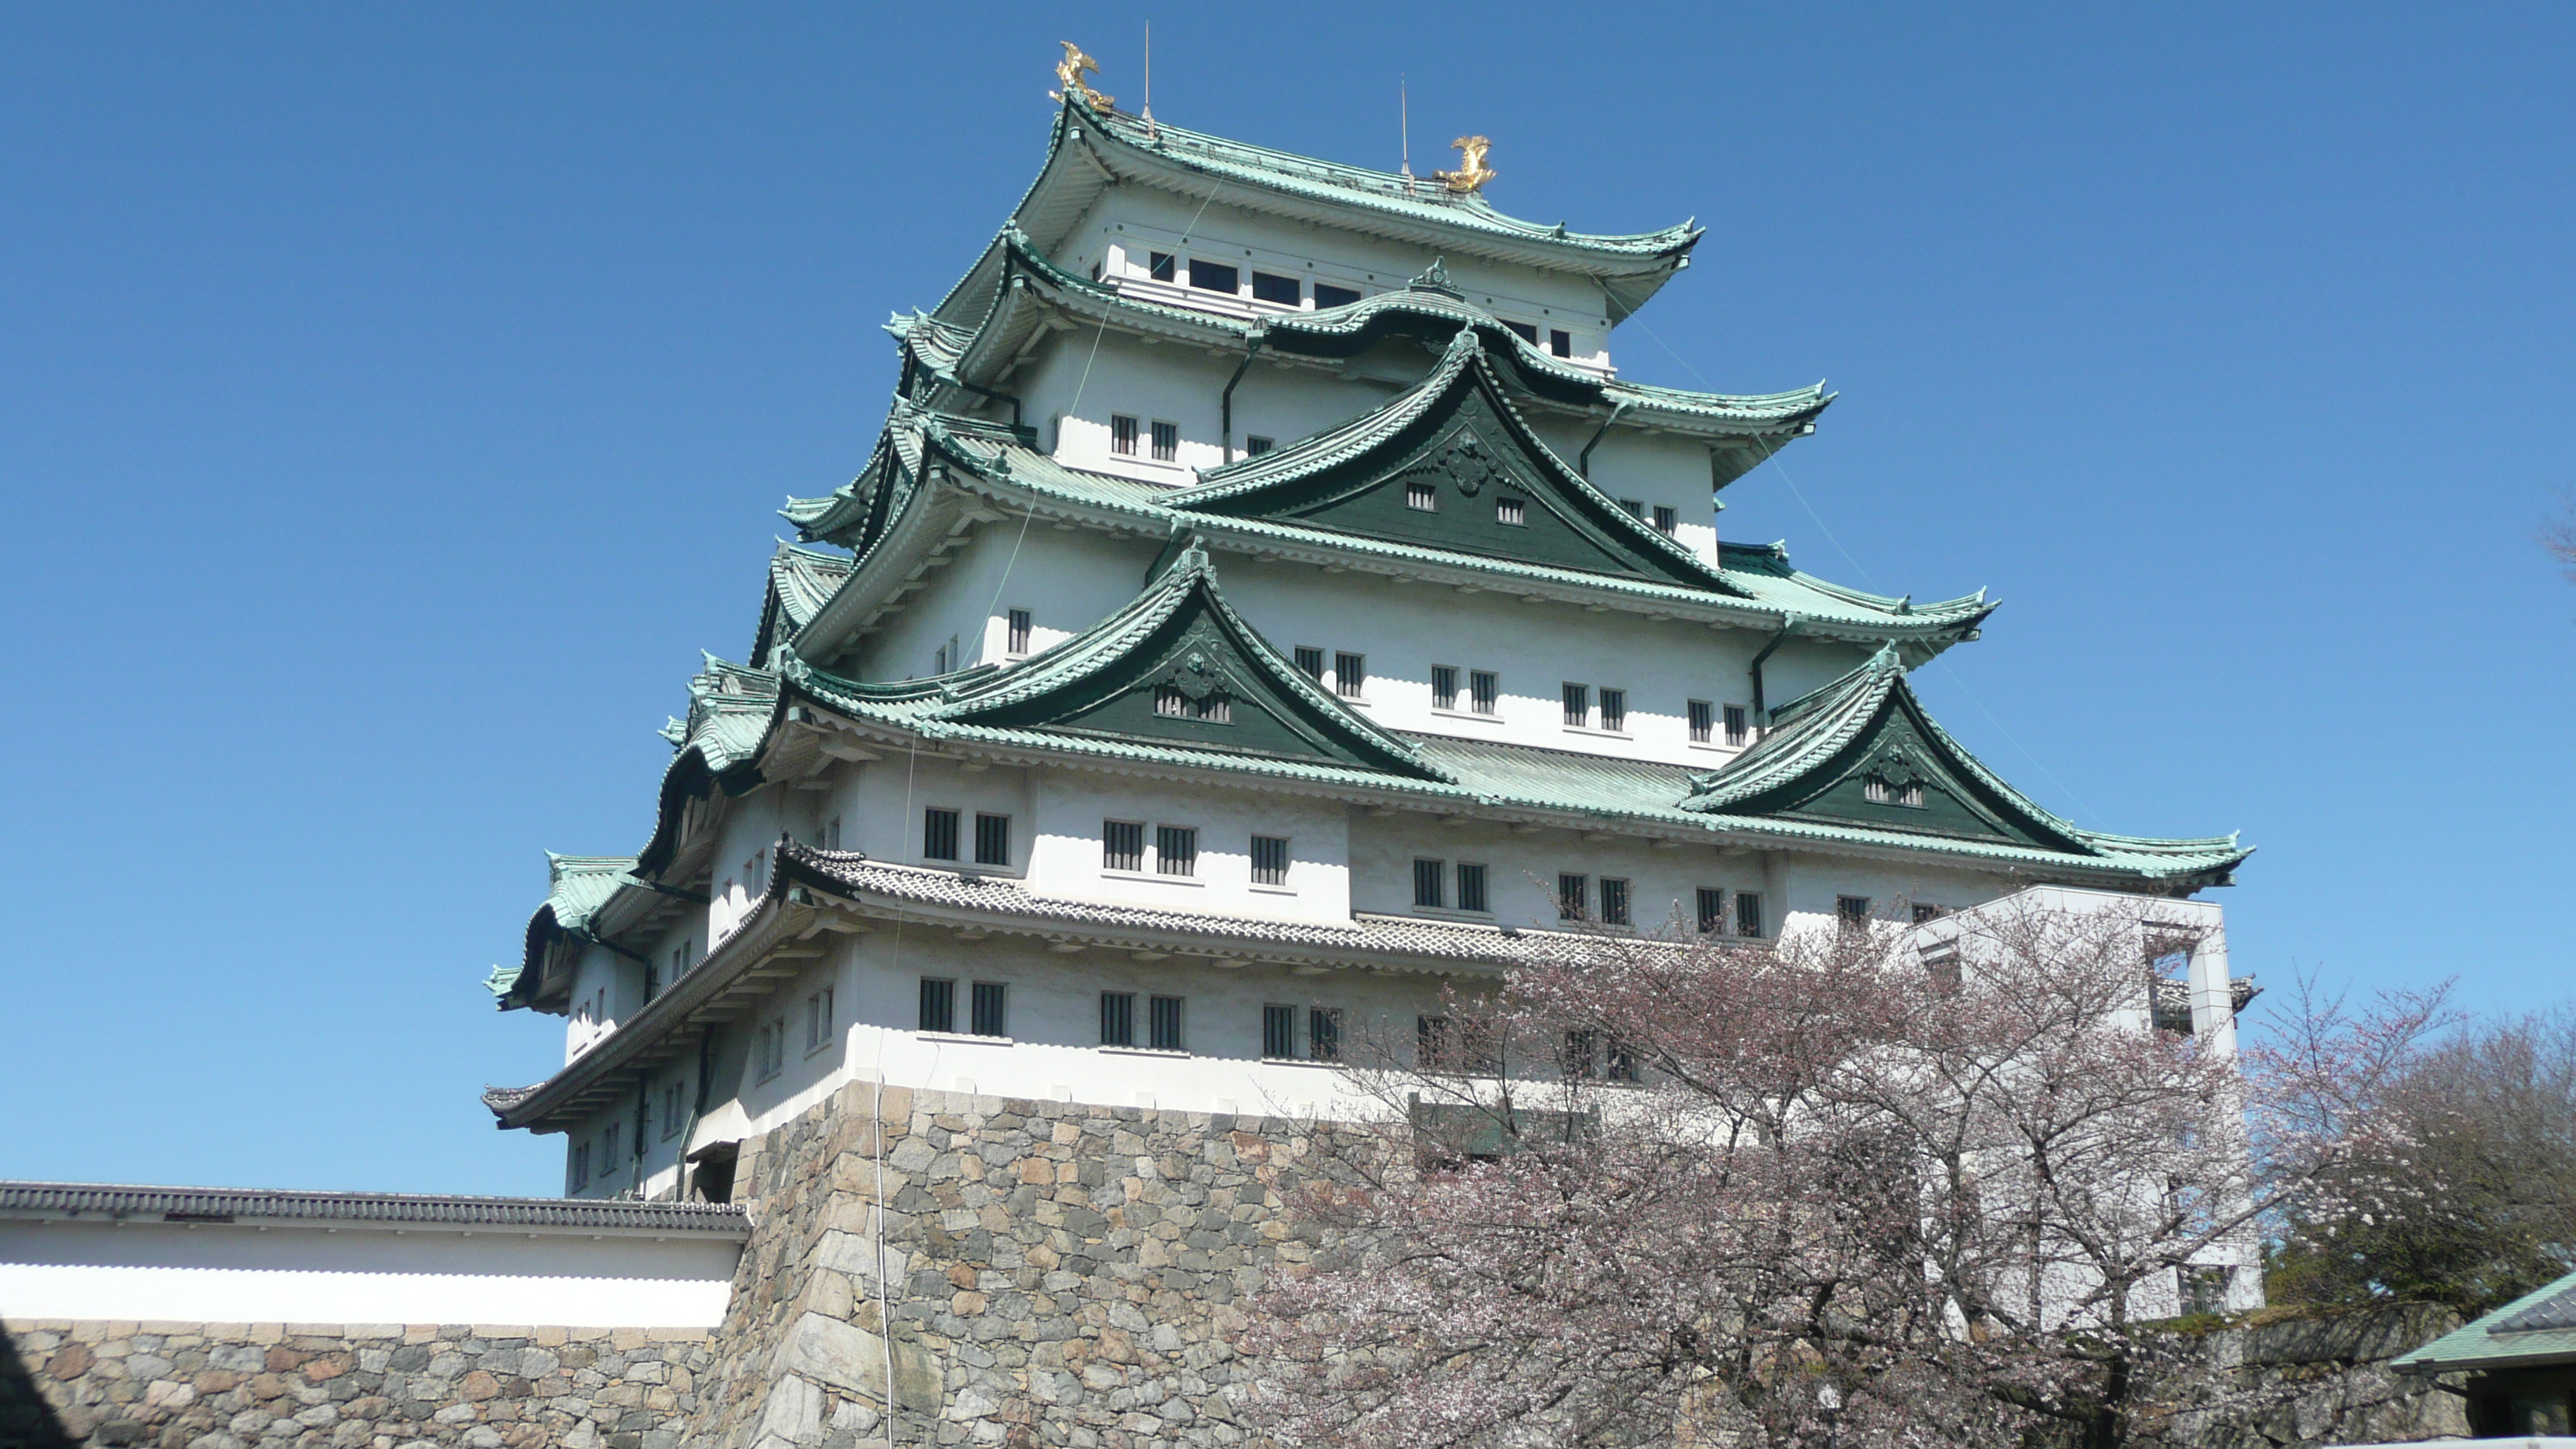 Lâu đài Nagoya - Nagoya Castle | Yeudulich